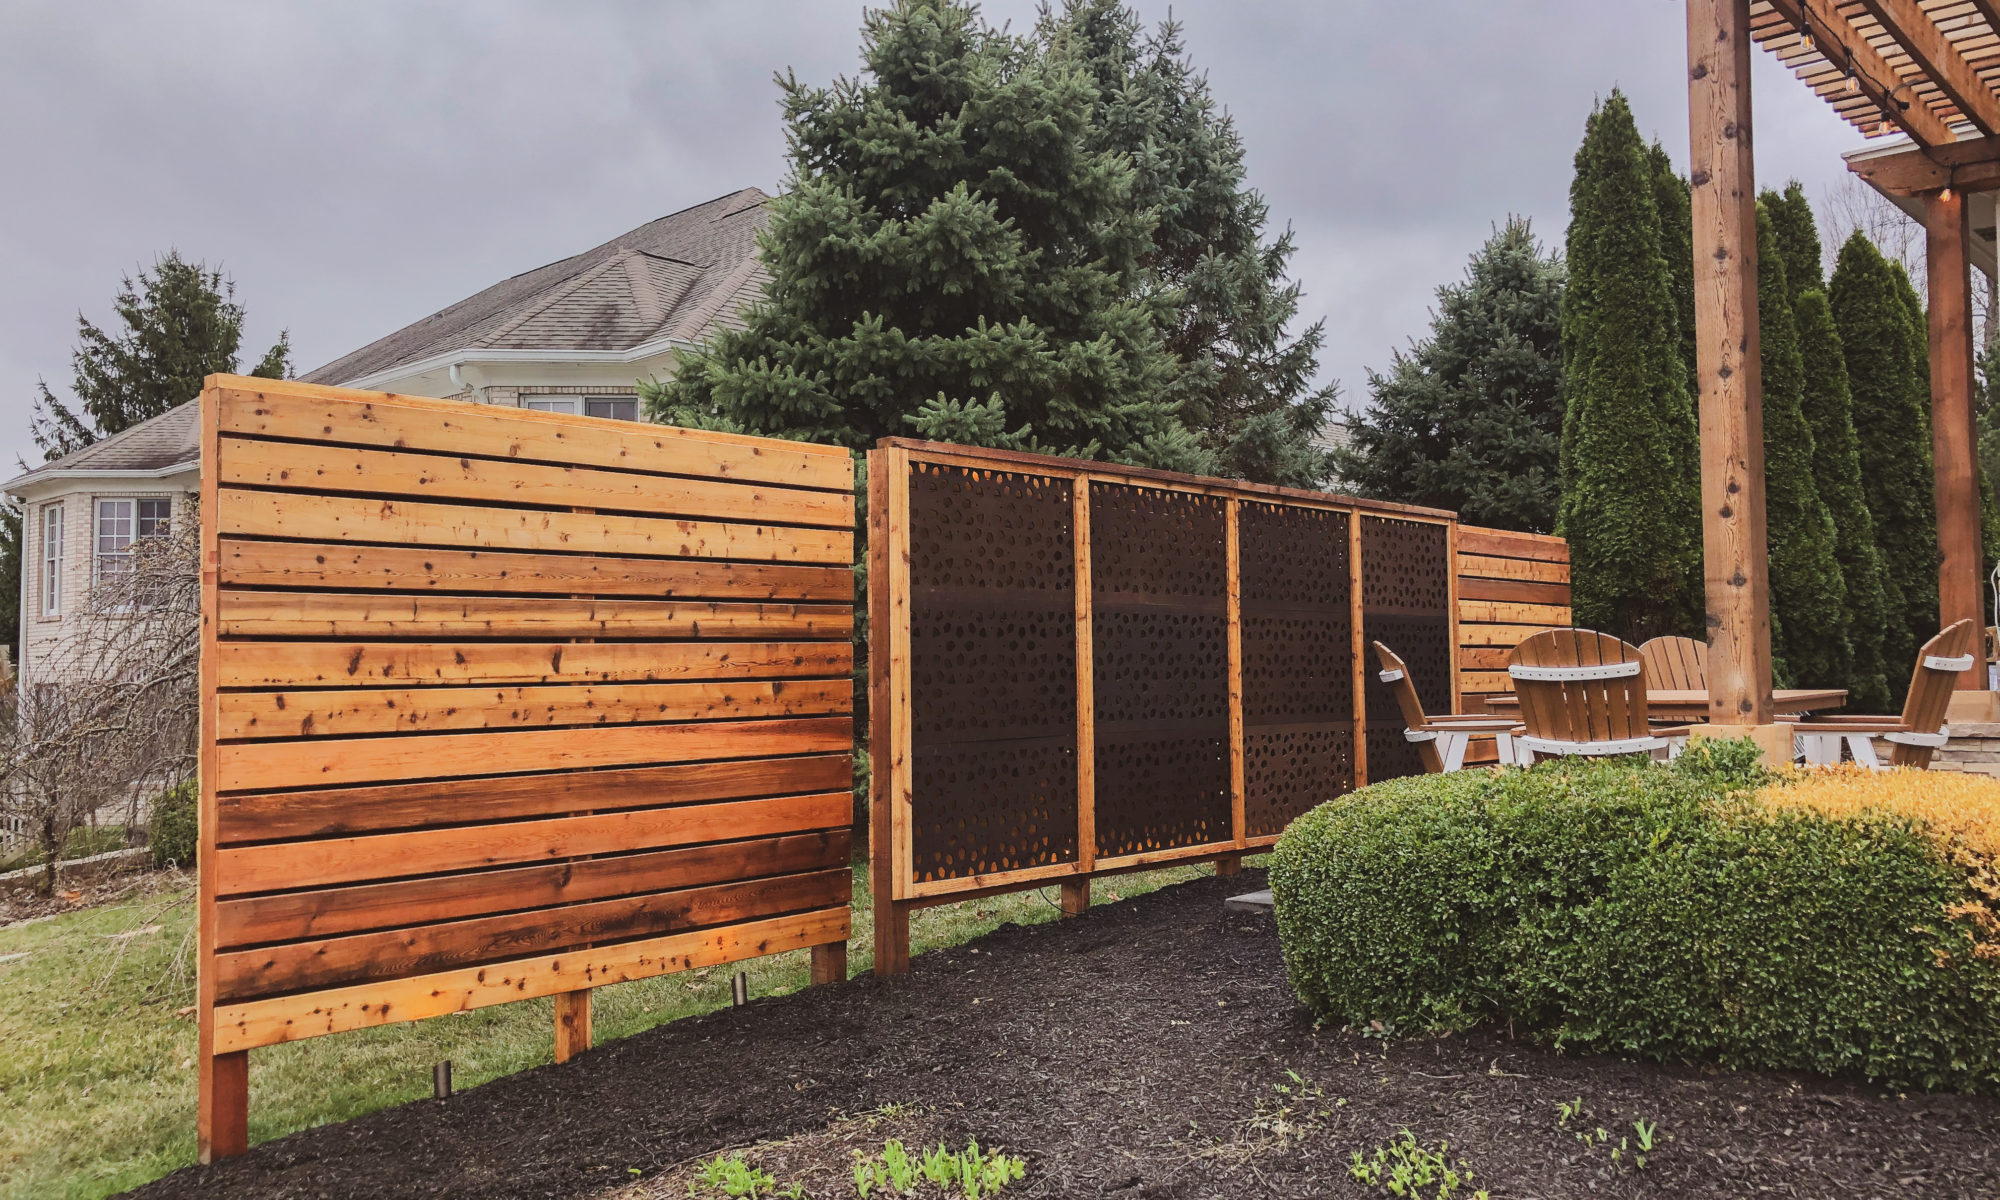 hickory stick pergola patio privacy screen precision outdoors backyard landscaping design custom screen fence grill kitchen